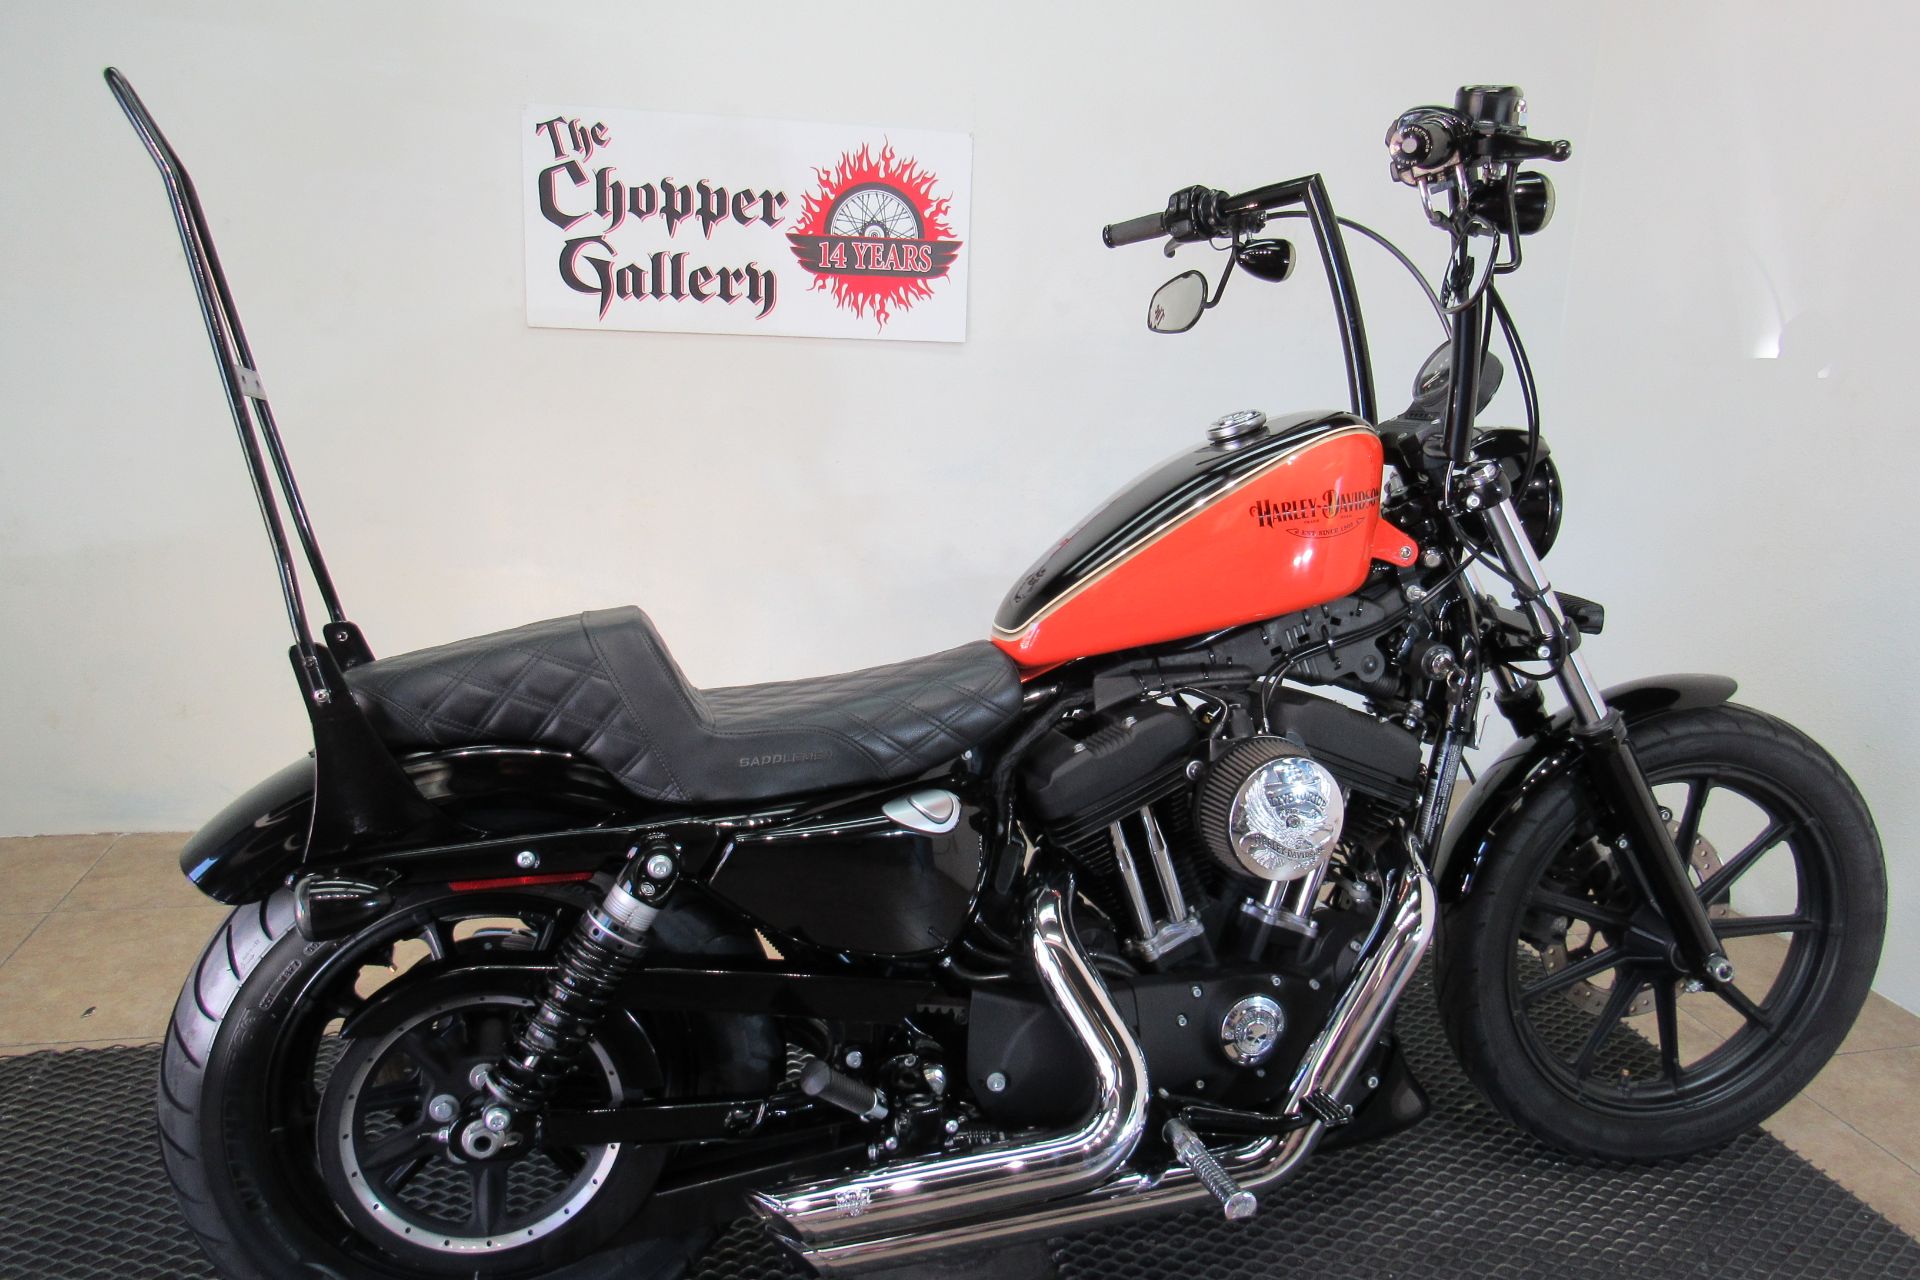 2020 Harley-Davidson Iron 1200™ in Temecula, California - Photo 10